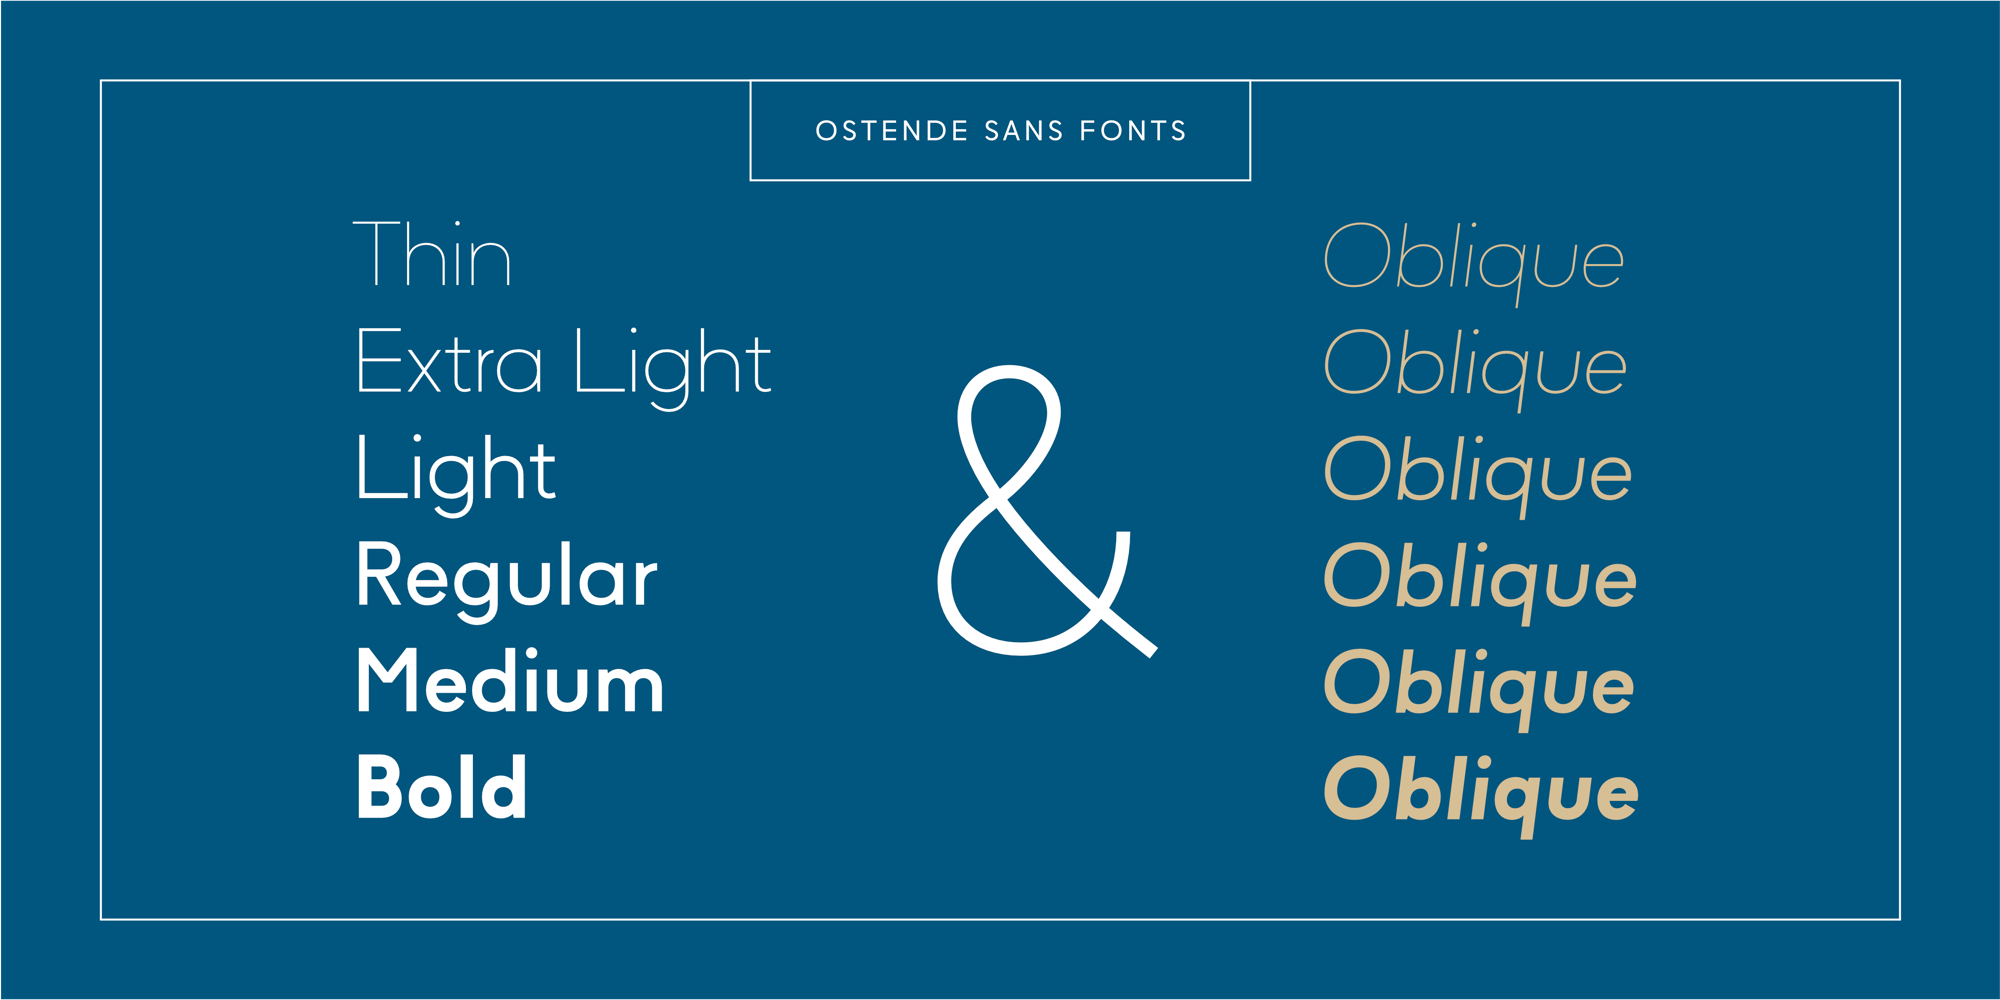 Each Ostende Sans typeface contains an international character set of 510 glyphs.